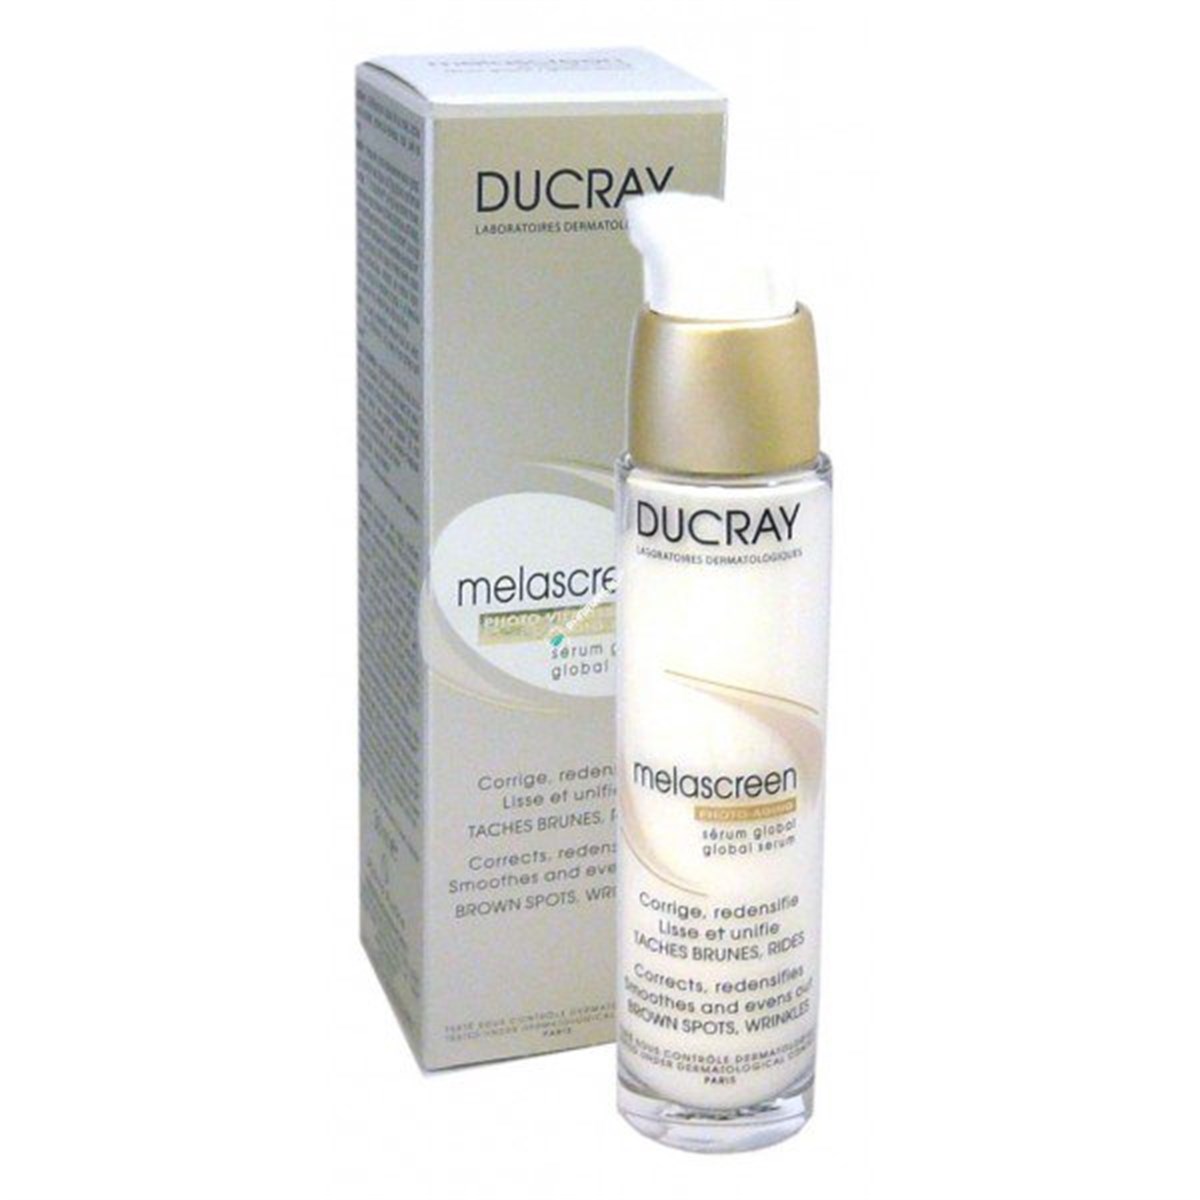 Ducray Melascreen Photo-Aging Global Serum 30 ml-LeylekKapida.com